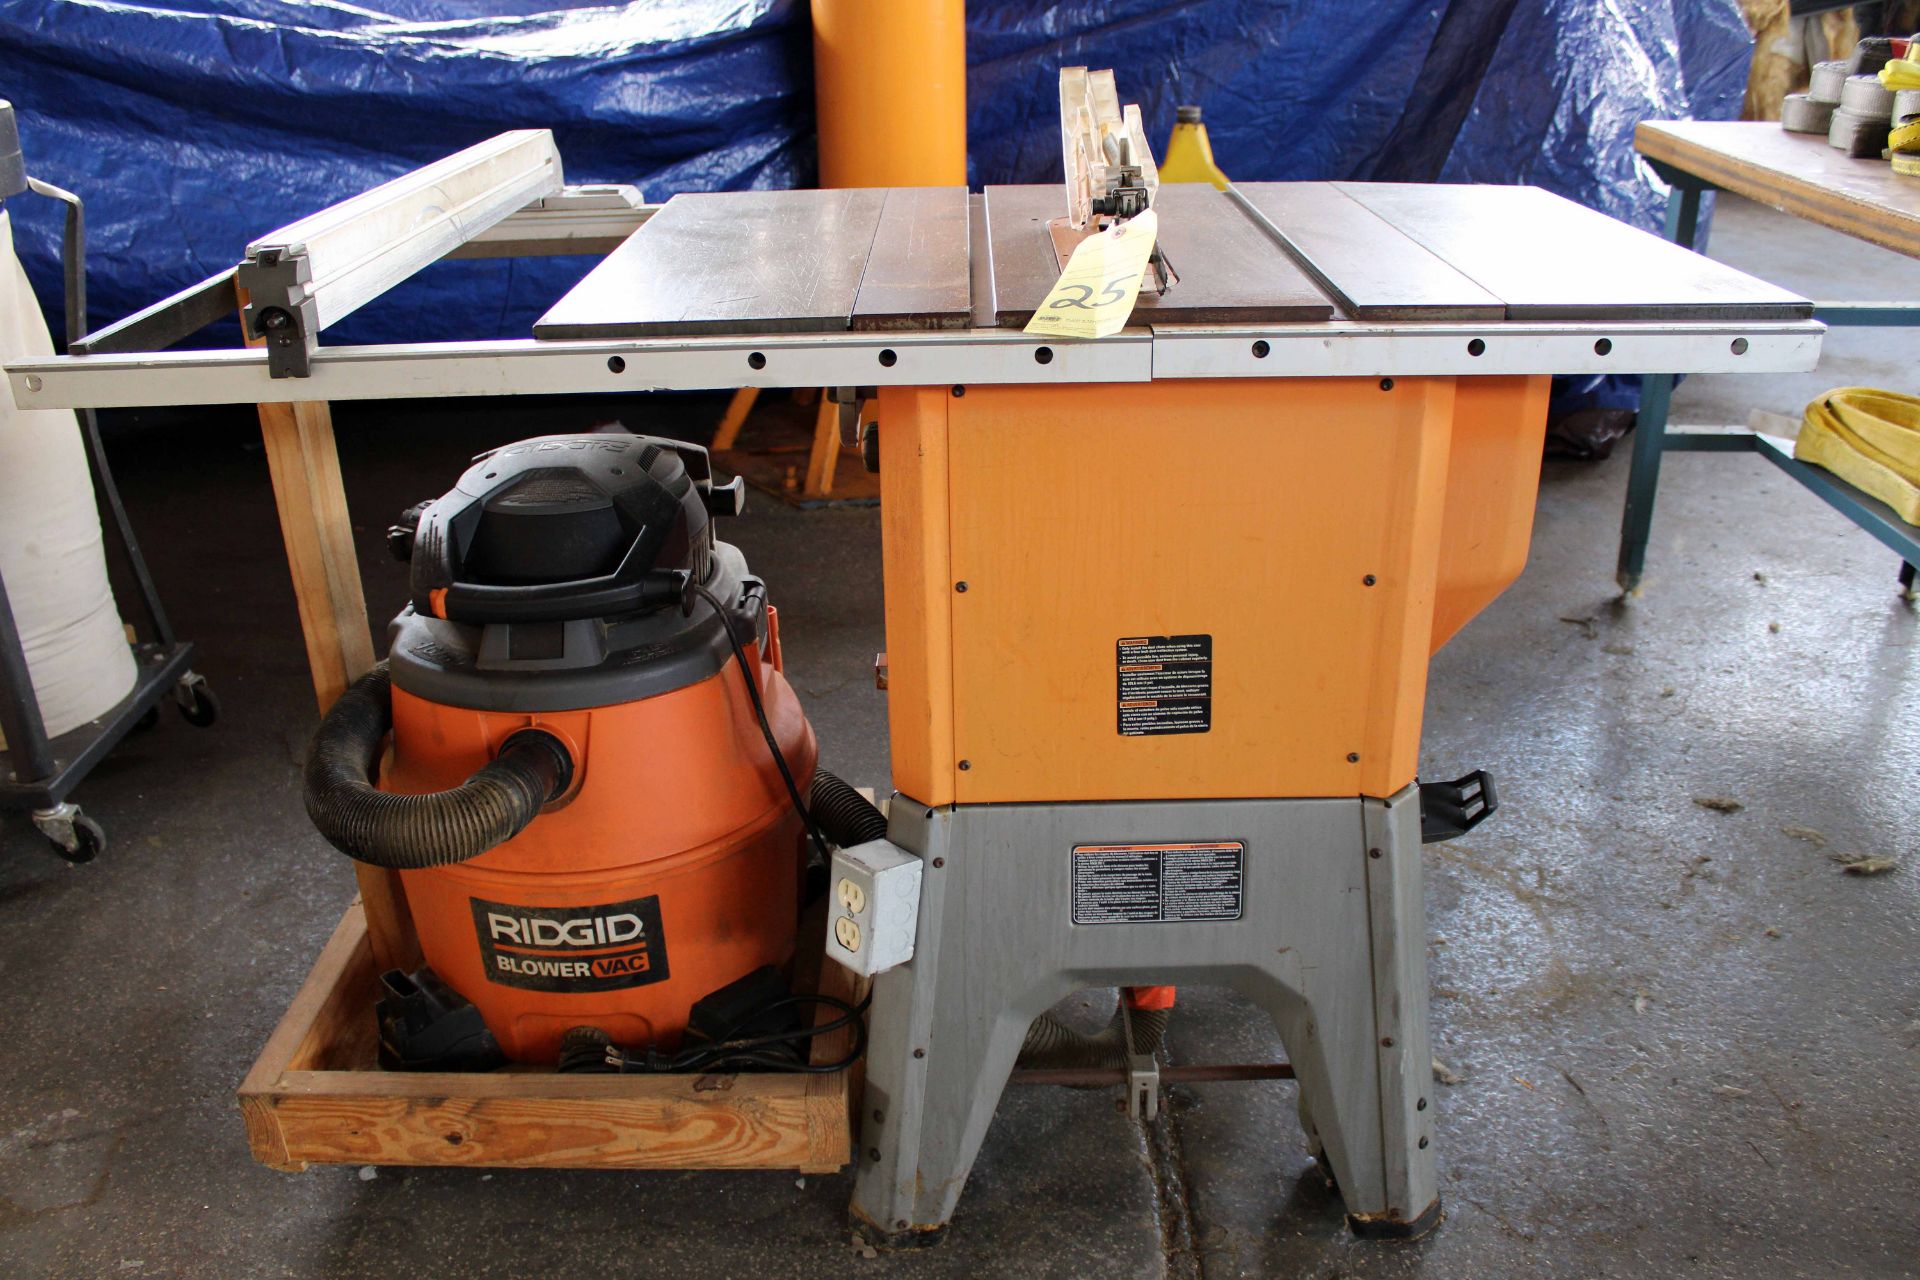 LOT CONSISTING OF: Ridgid 10" Mdl. R4512 table saw, Ridgid blower vacuum